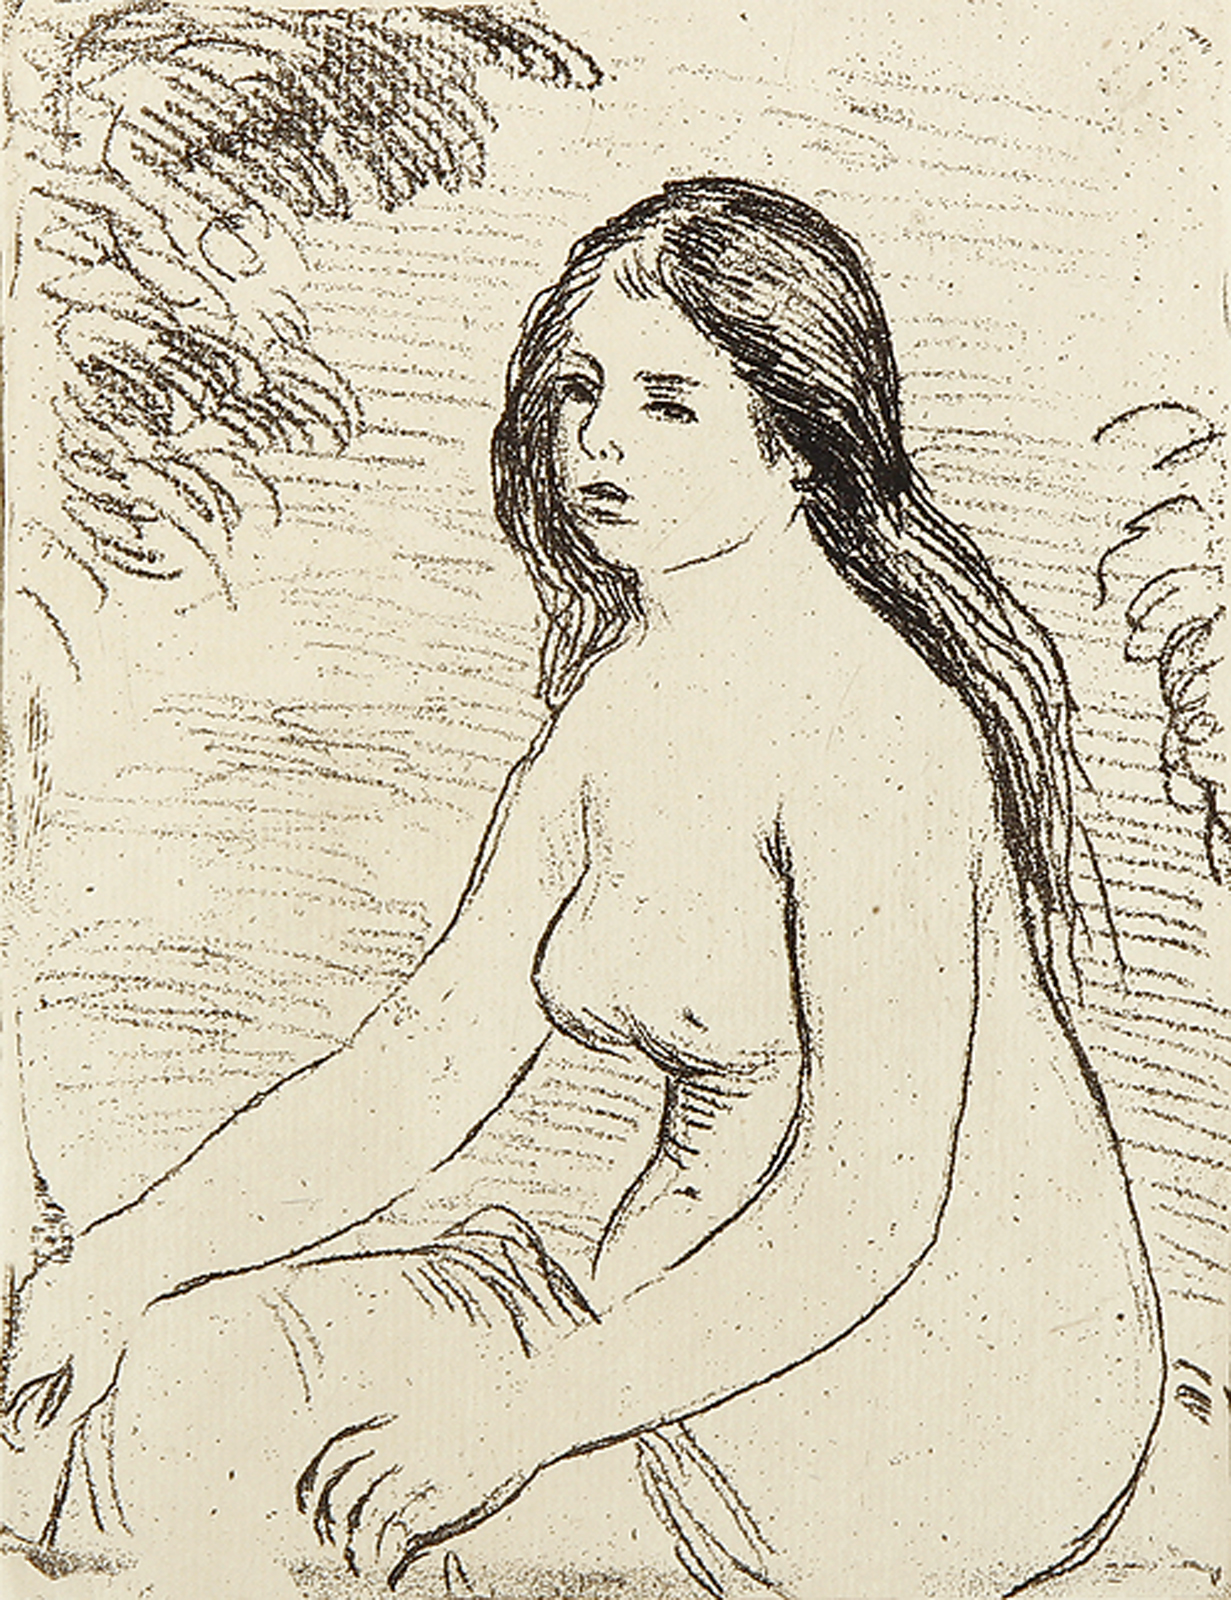 Femme nue assise.